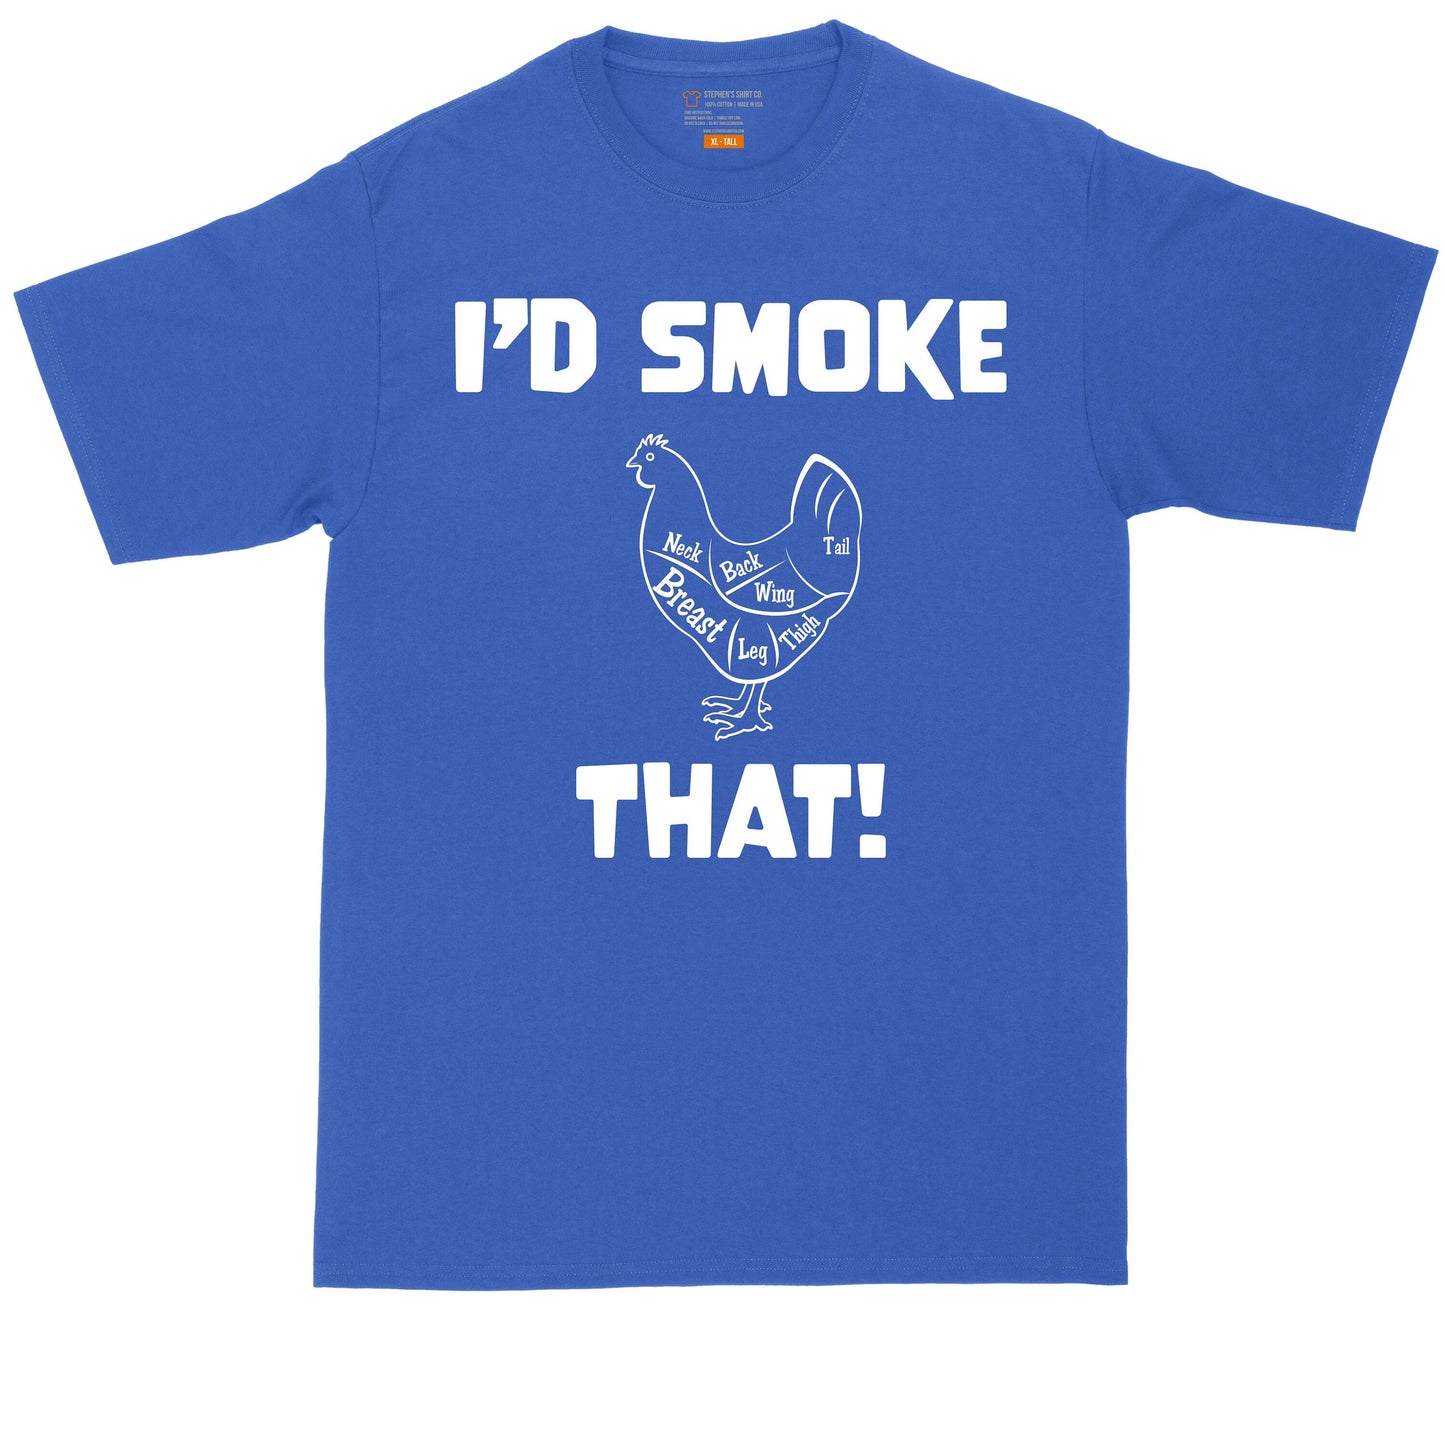 I'd Smoke That Chicken Version | Big and Tall Mens T-Shirt | Funny T-Shirt | Graphic T-Shirt